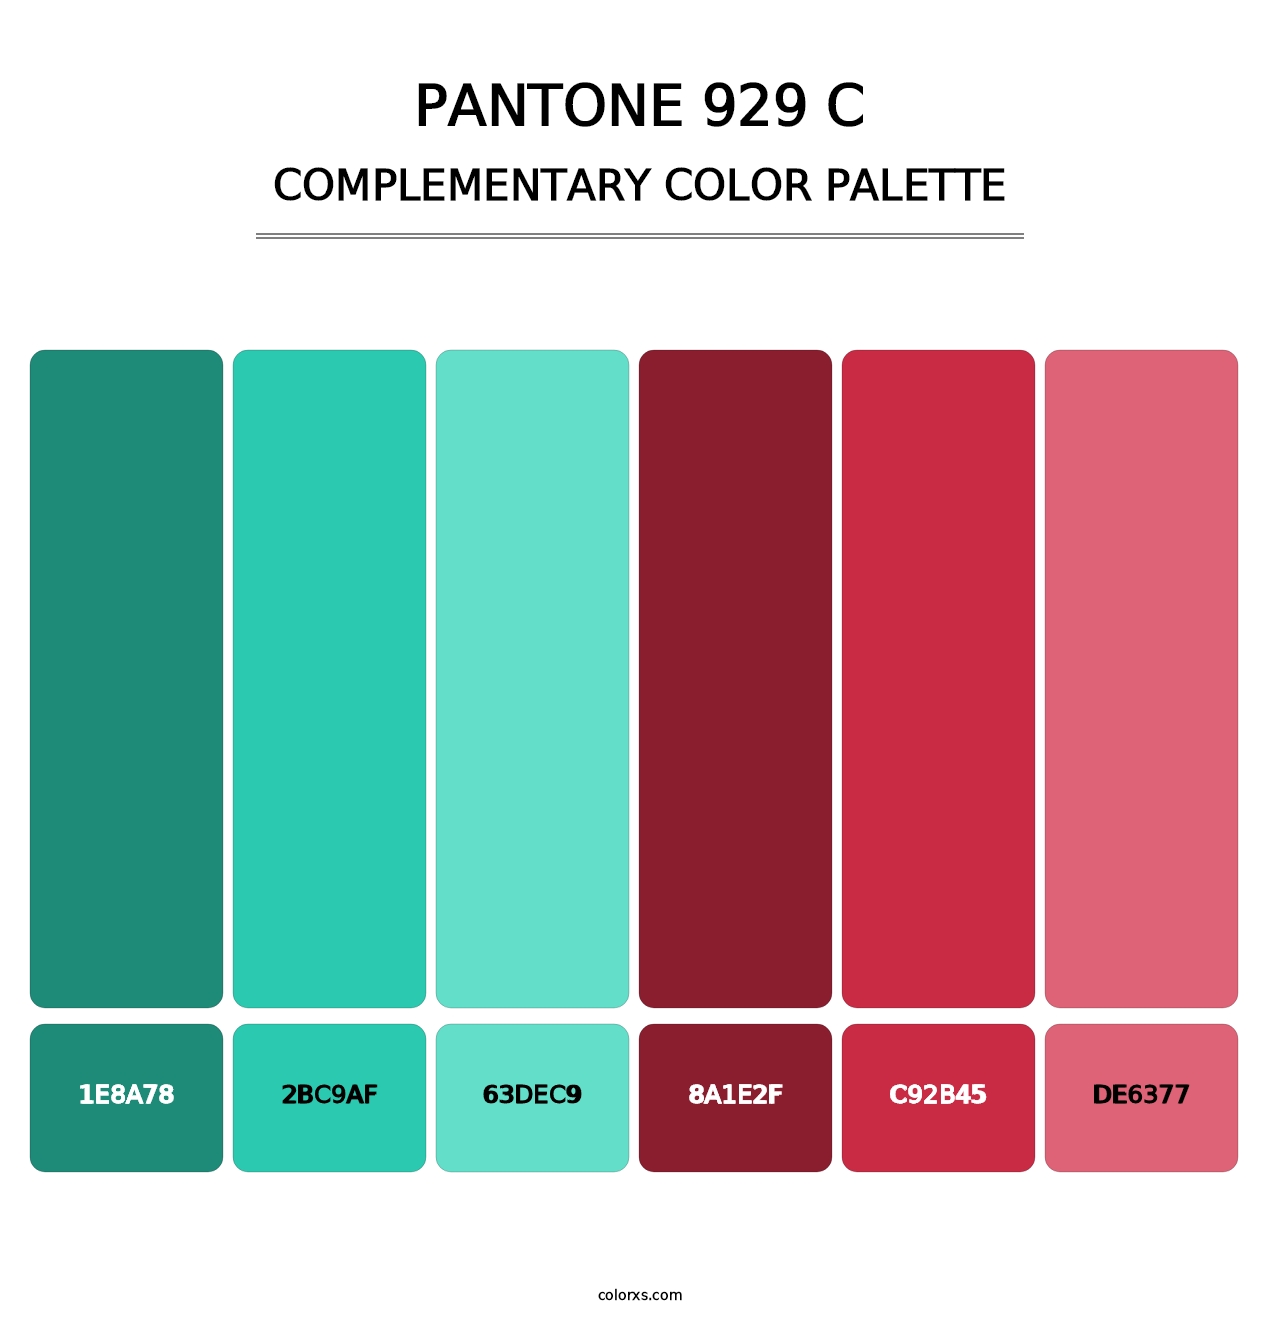 PANTONE 929 C - Complementary Color Palette